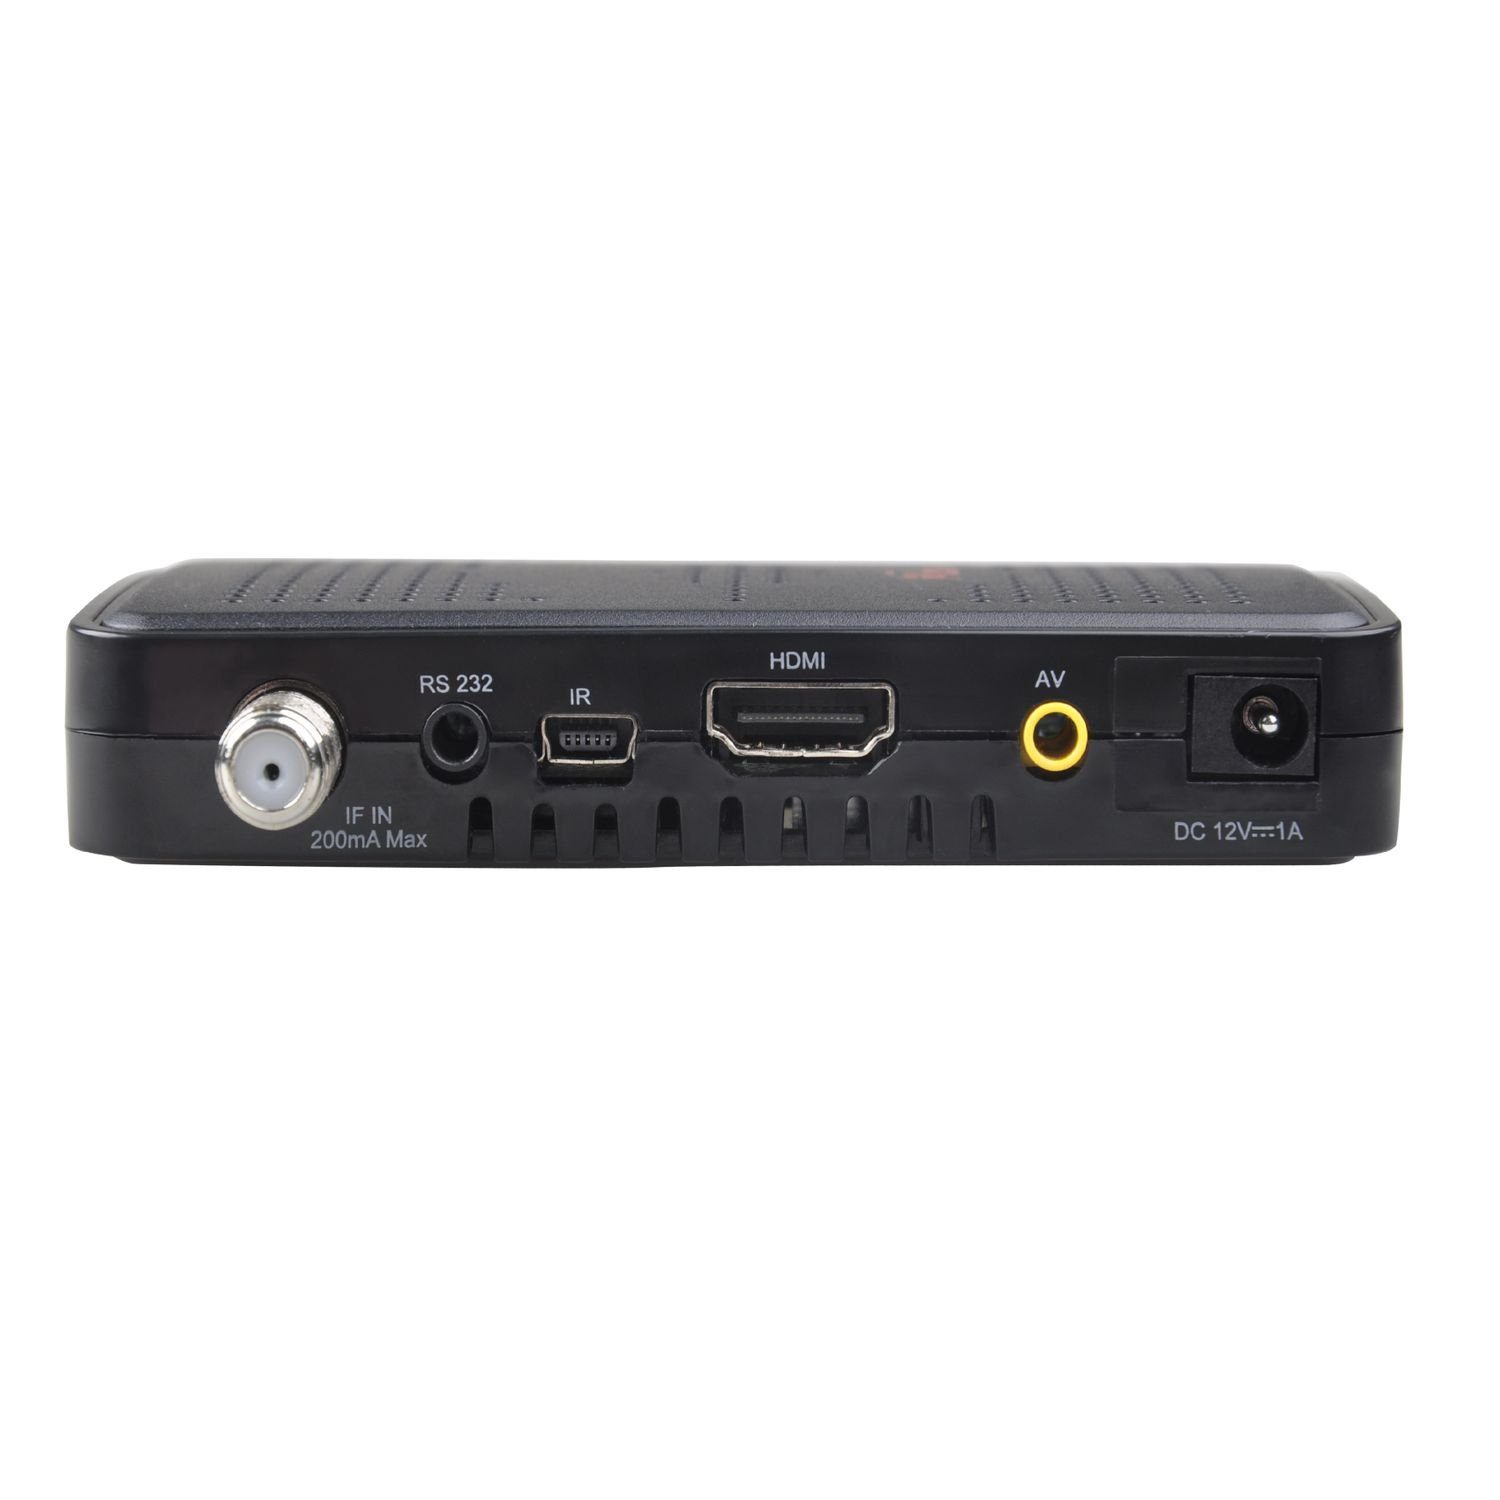 FTE Maximal HDTV eXtreme Full-HD Satellitenreceiver USB Sat-Receiver HD Redlight (PVR)